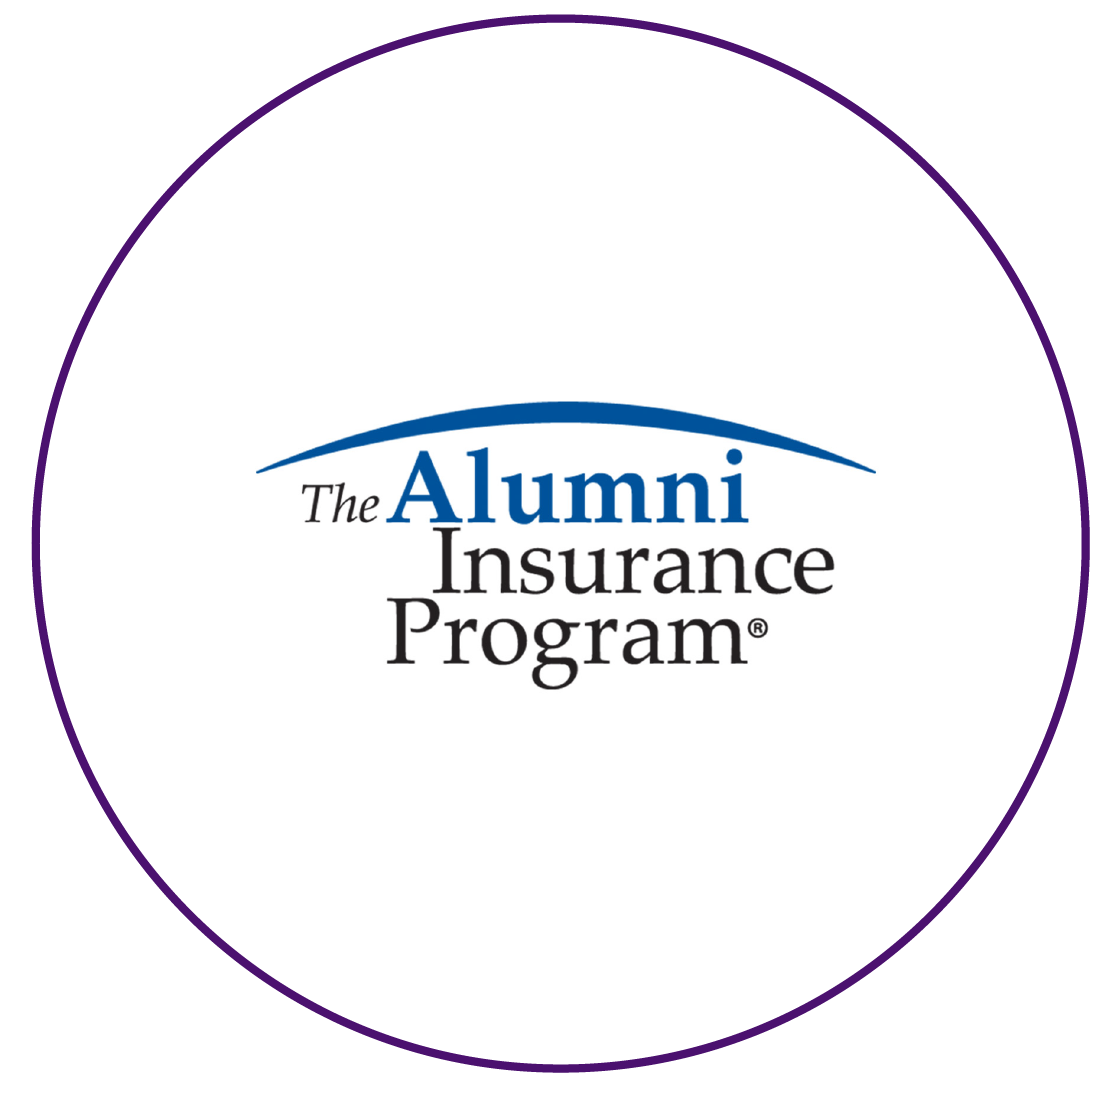 The Alumni Insurance Program logo